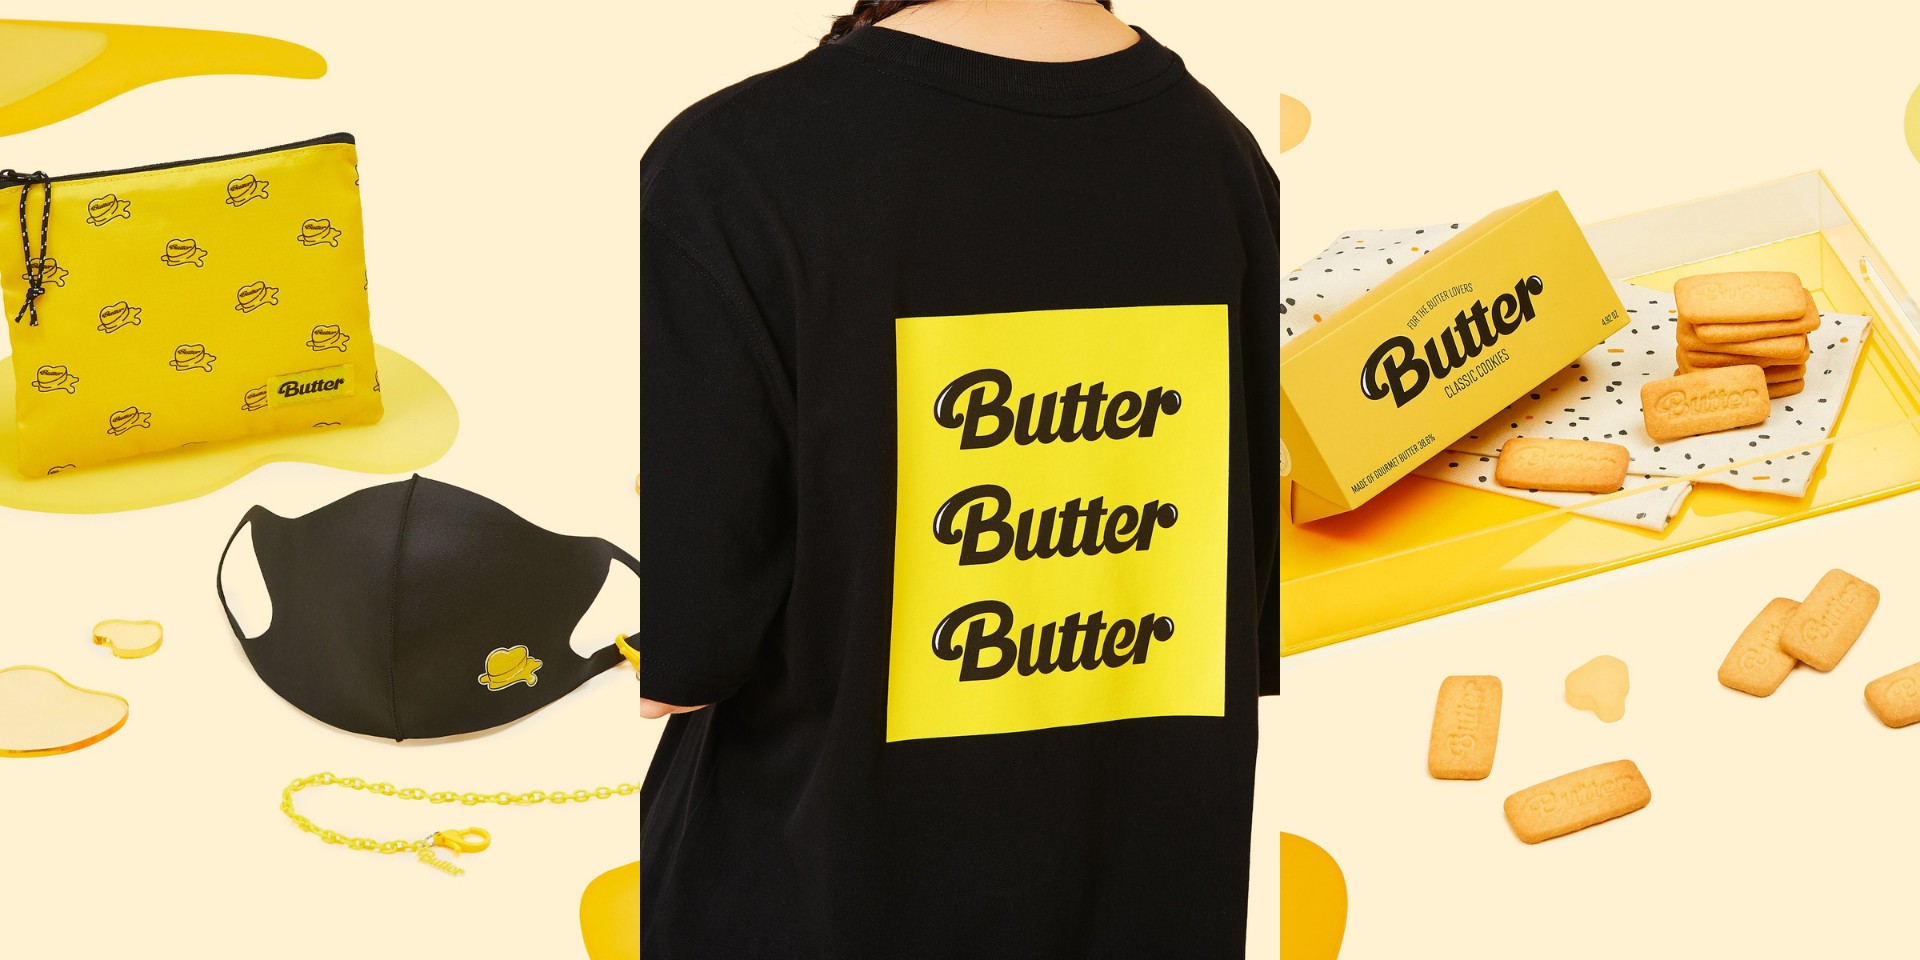 BTS unveil 'Butter' merch – butter cookies, shirts, face masks, and more